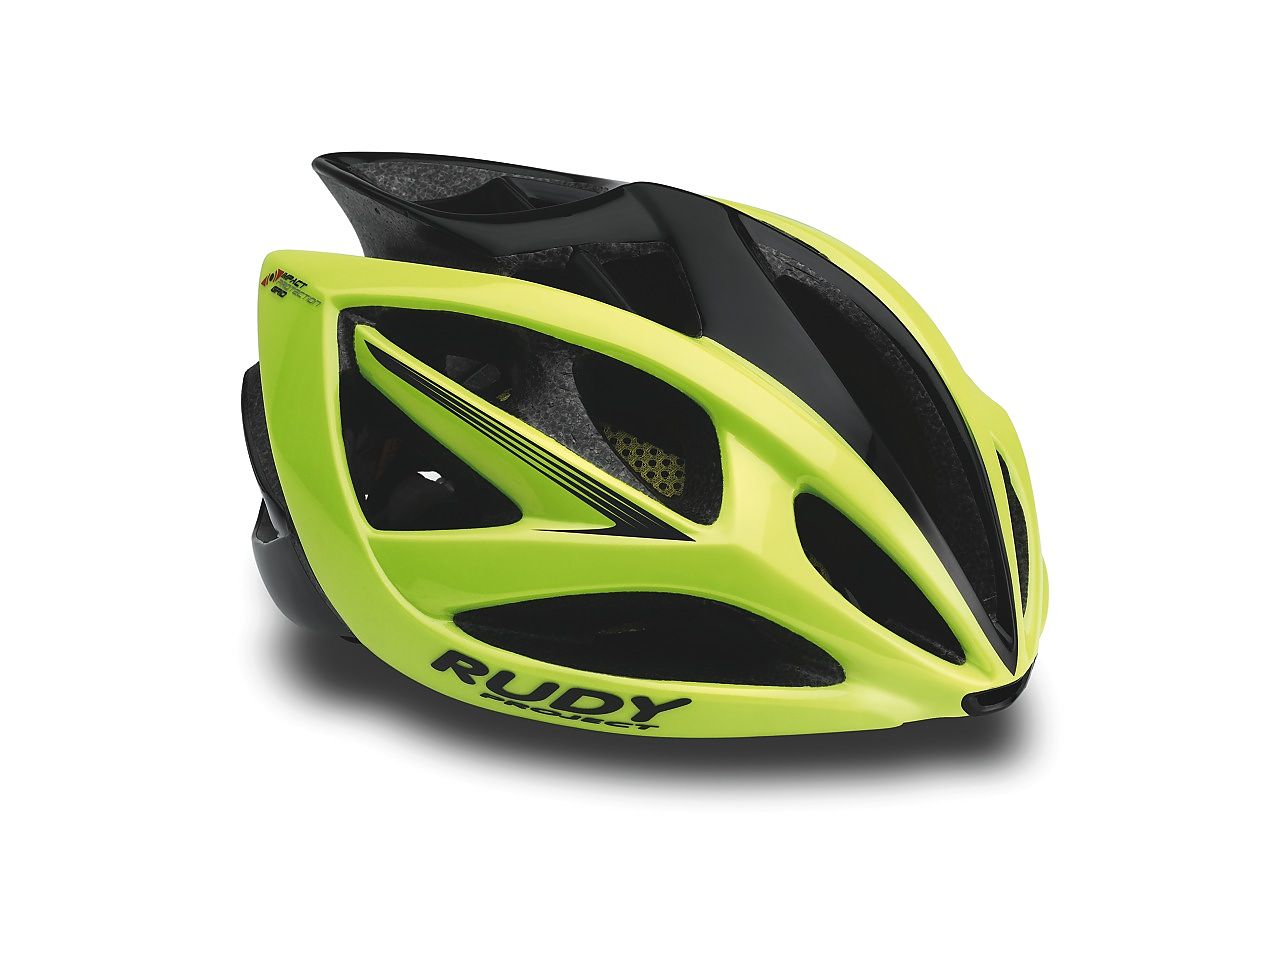 Velo pro shop. Велошлем Briko. Сменная подкладка в шлем Rudy Project Airstorm Black. Велокаска. Grey/Yellow-Fluo.